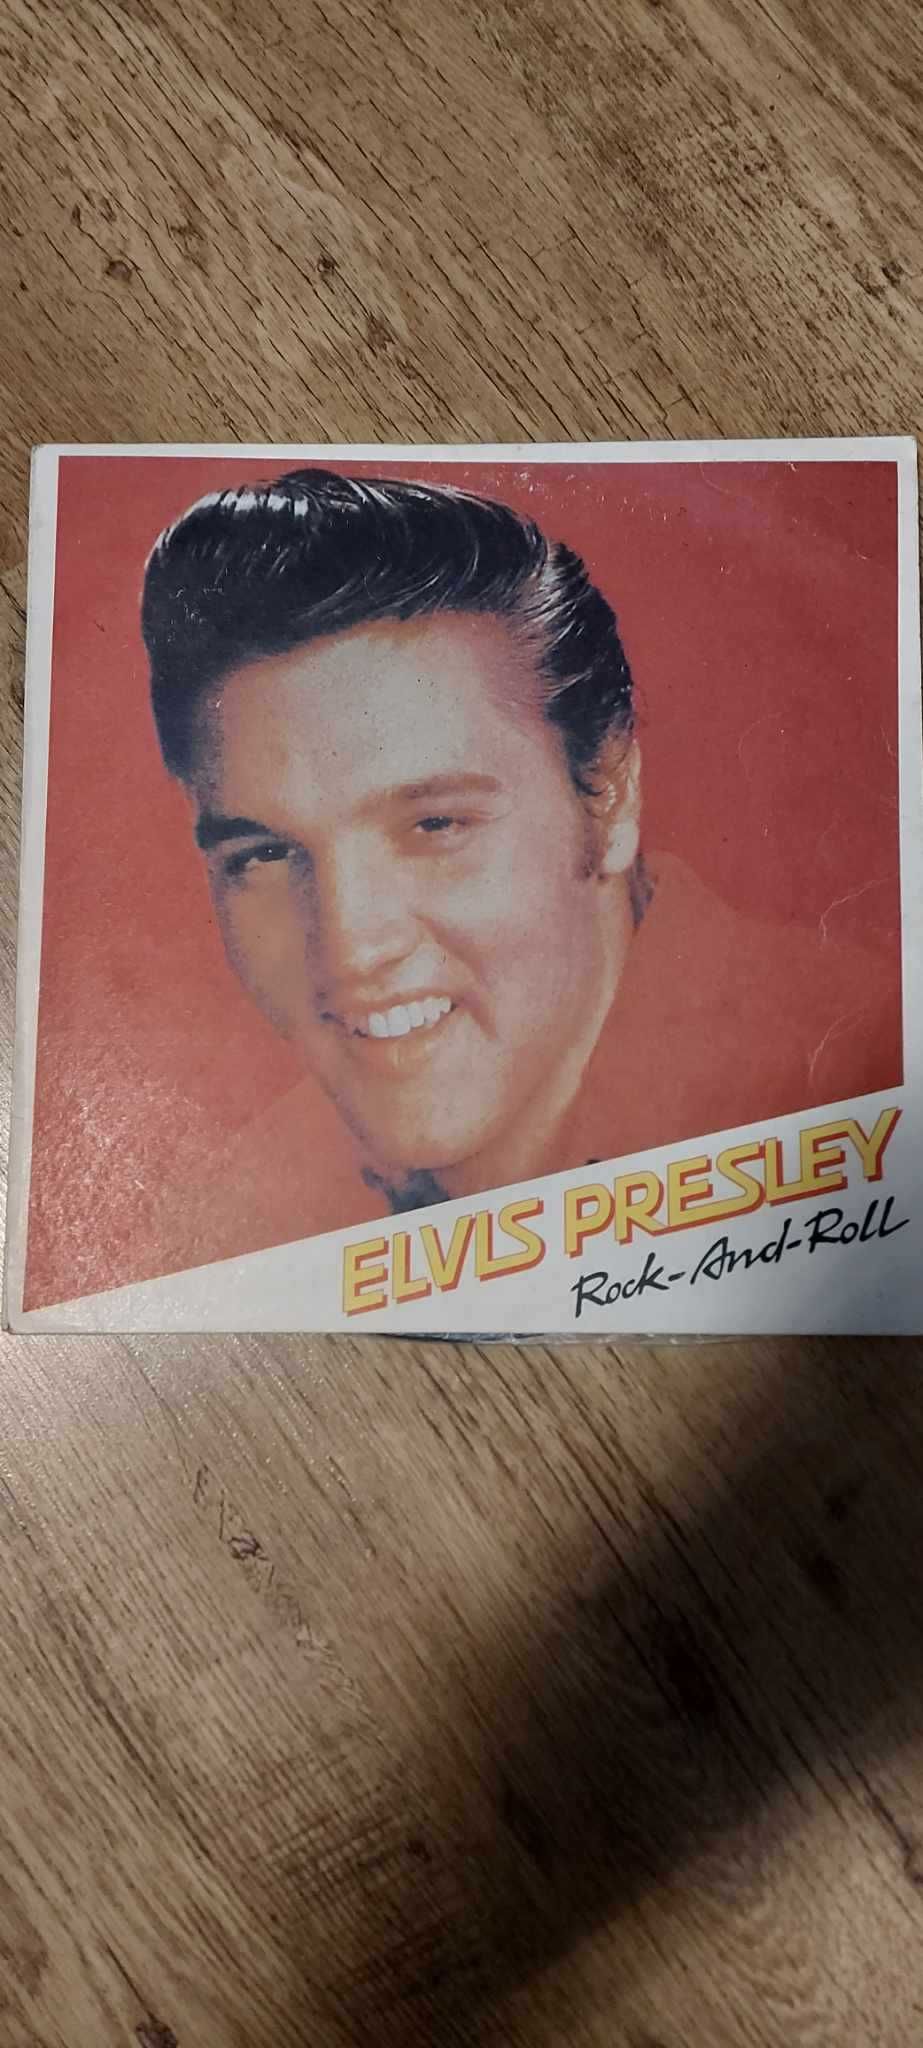 Płyta winylowa Elvis Presley - Rock-And-Roll